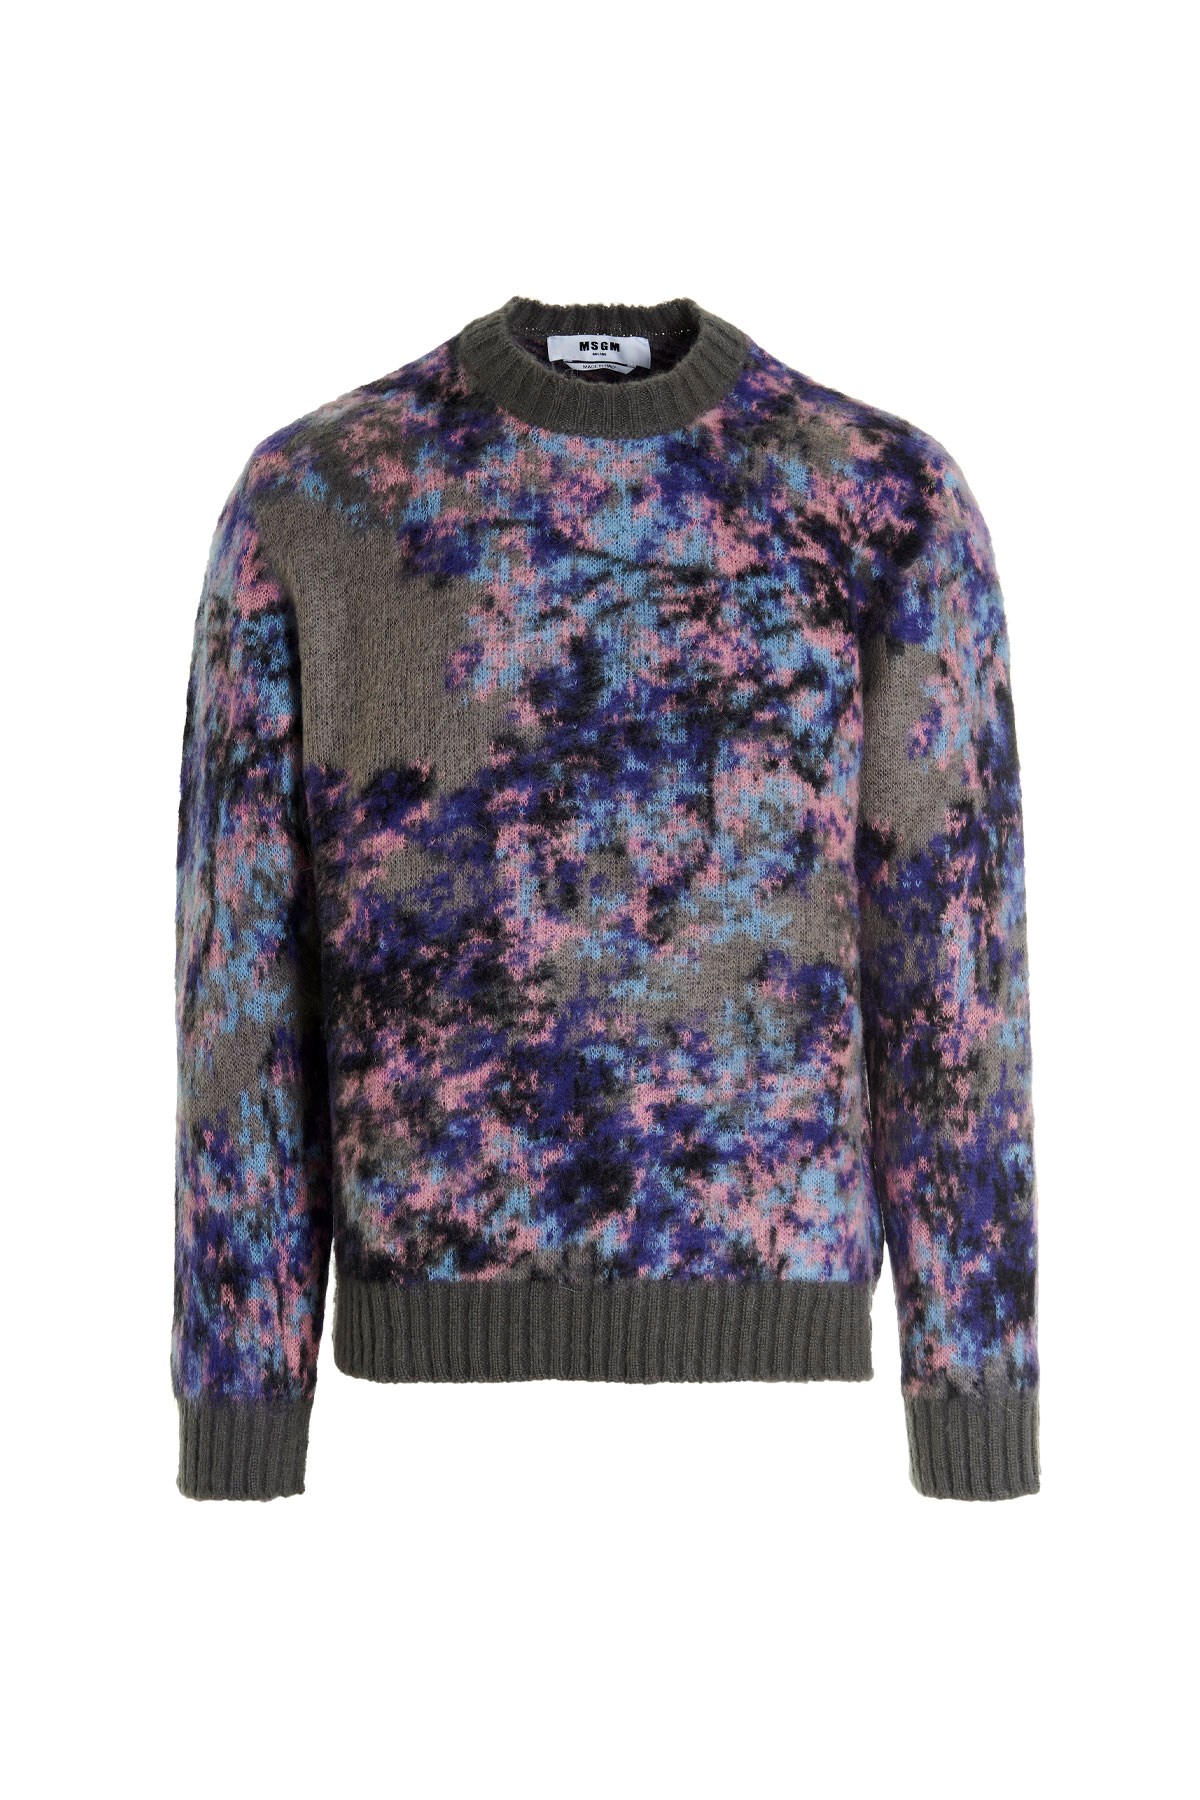 MSGM Jacquard Sweater